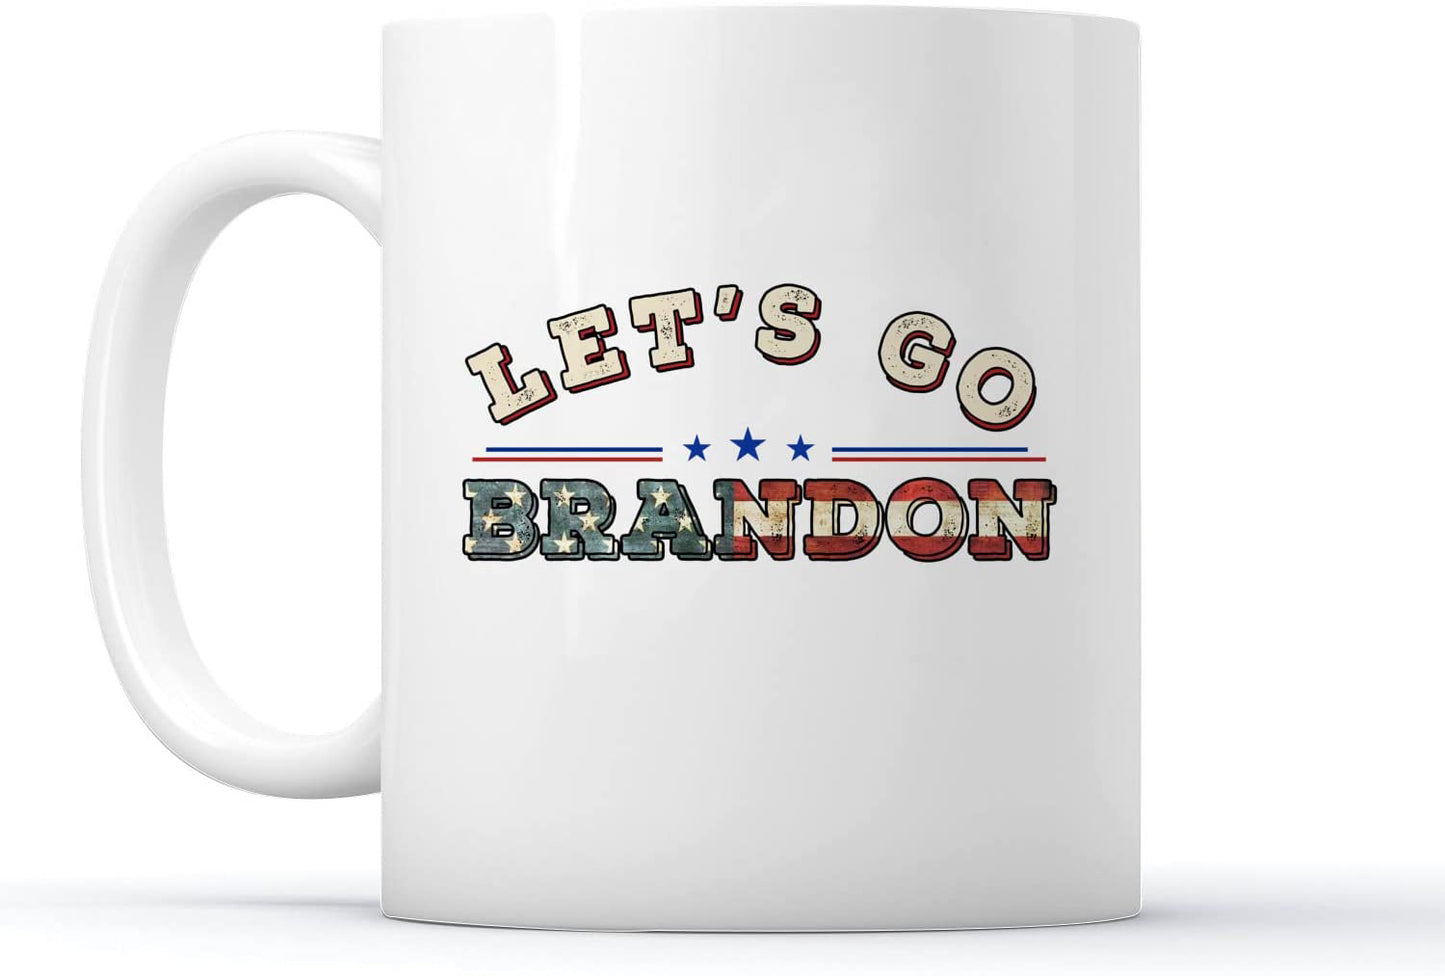 Let's Go Brandon Ceramic Coffee Mark Cup Tea Water Cup English